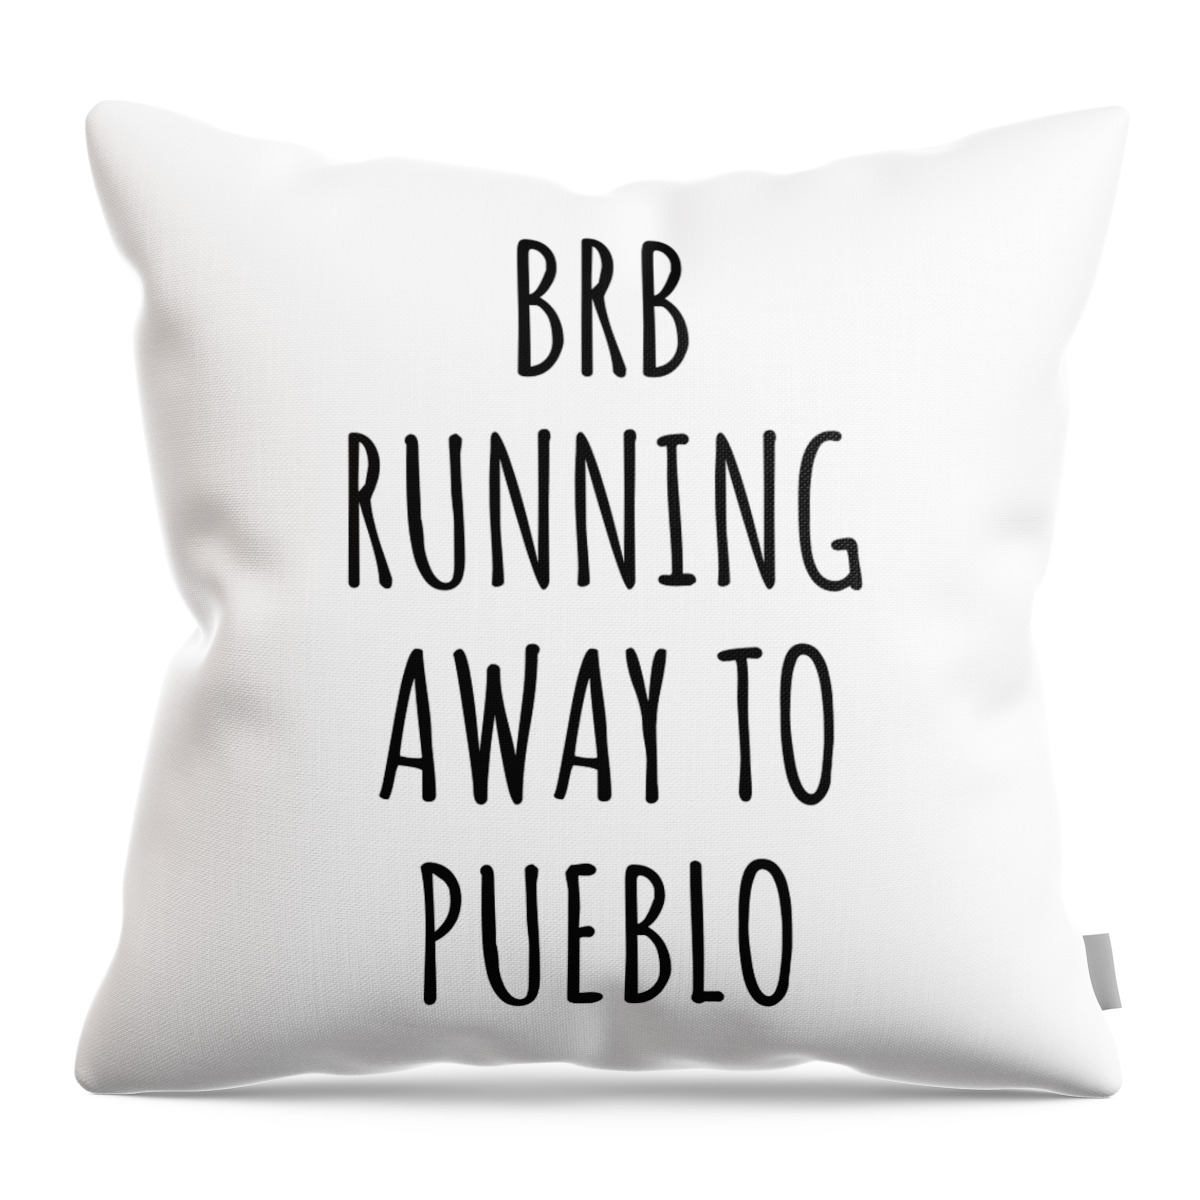 Pueblo Gift Throw Pillow featuring the digital art BRB Running Away To Pueblo by Jeff Creation